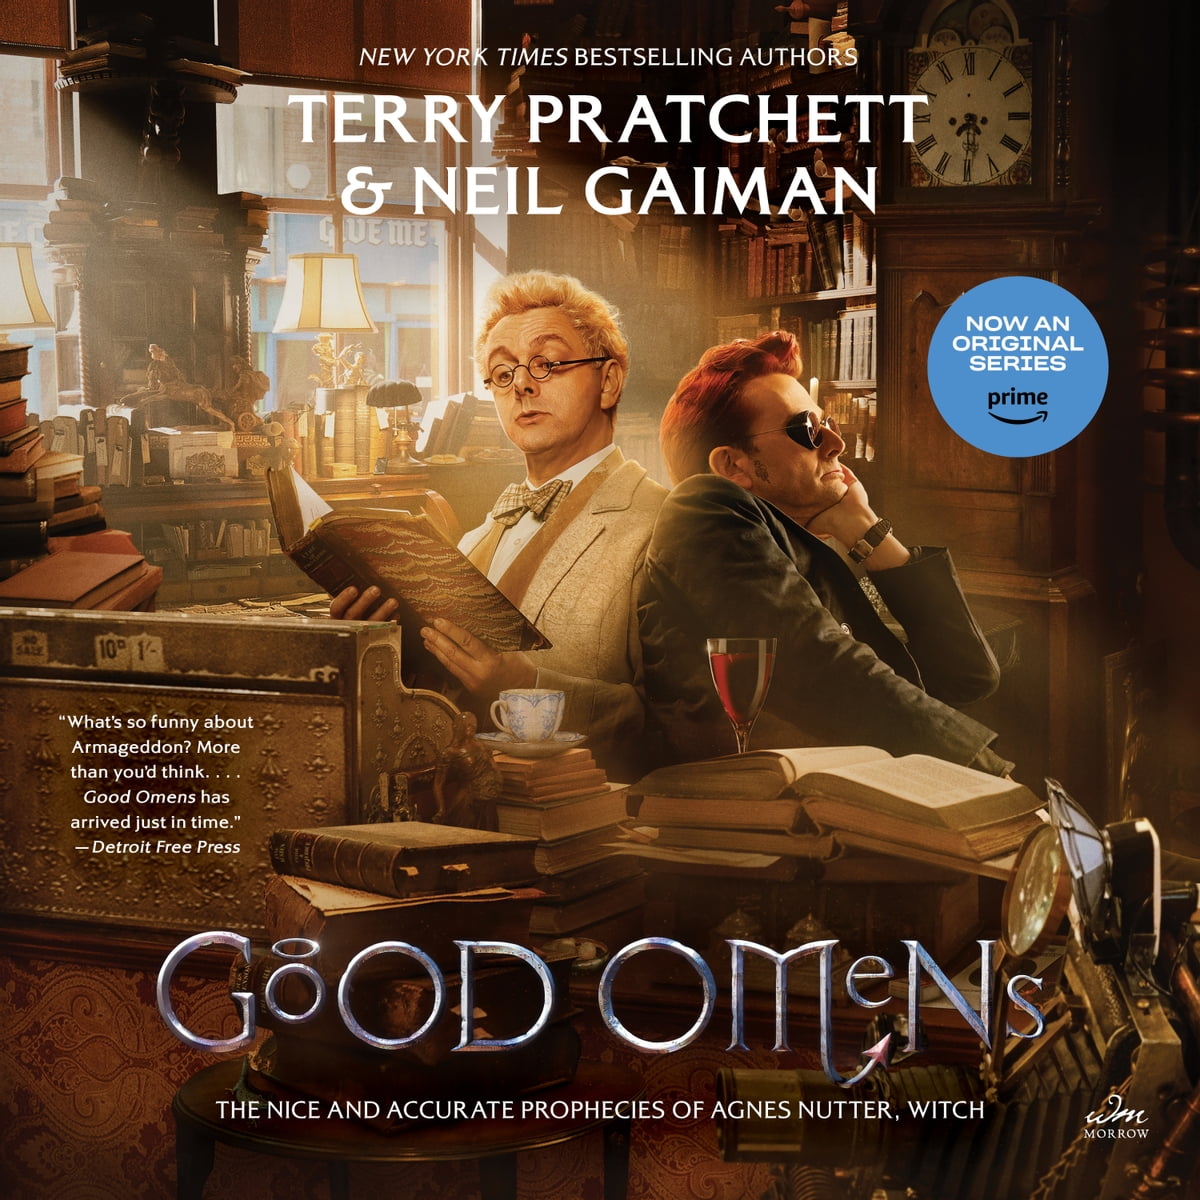 Good Omens by Terry Pratchett and Neil Gaiman